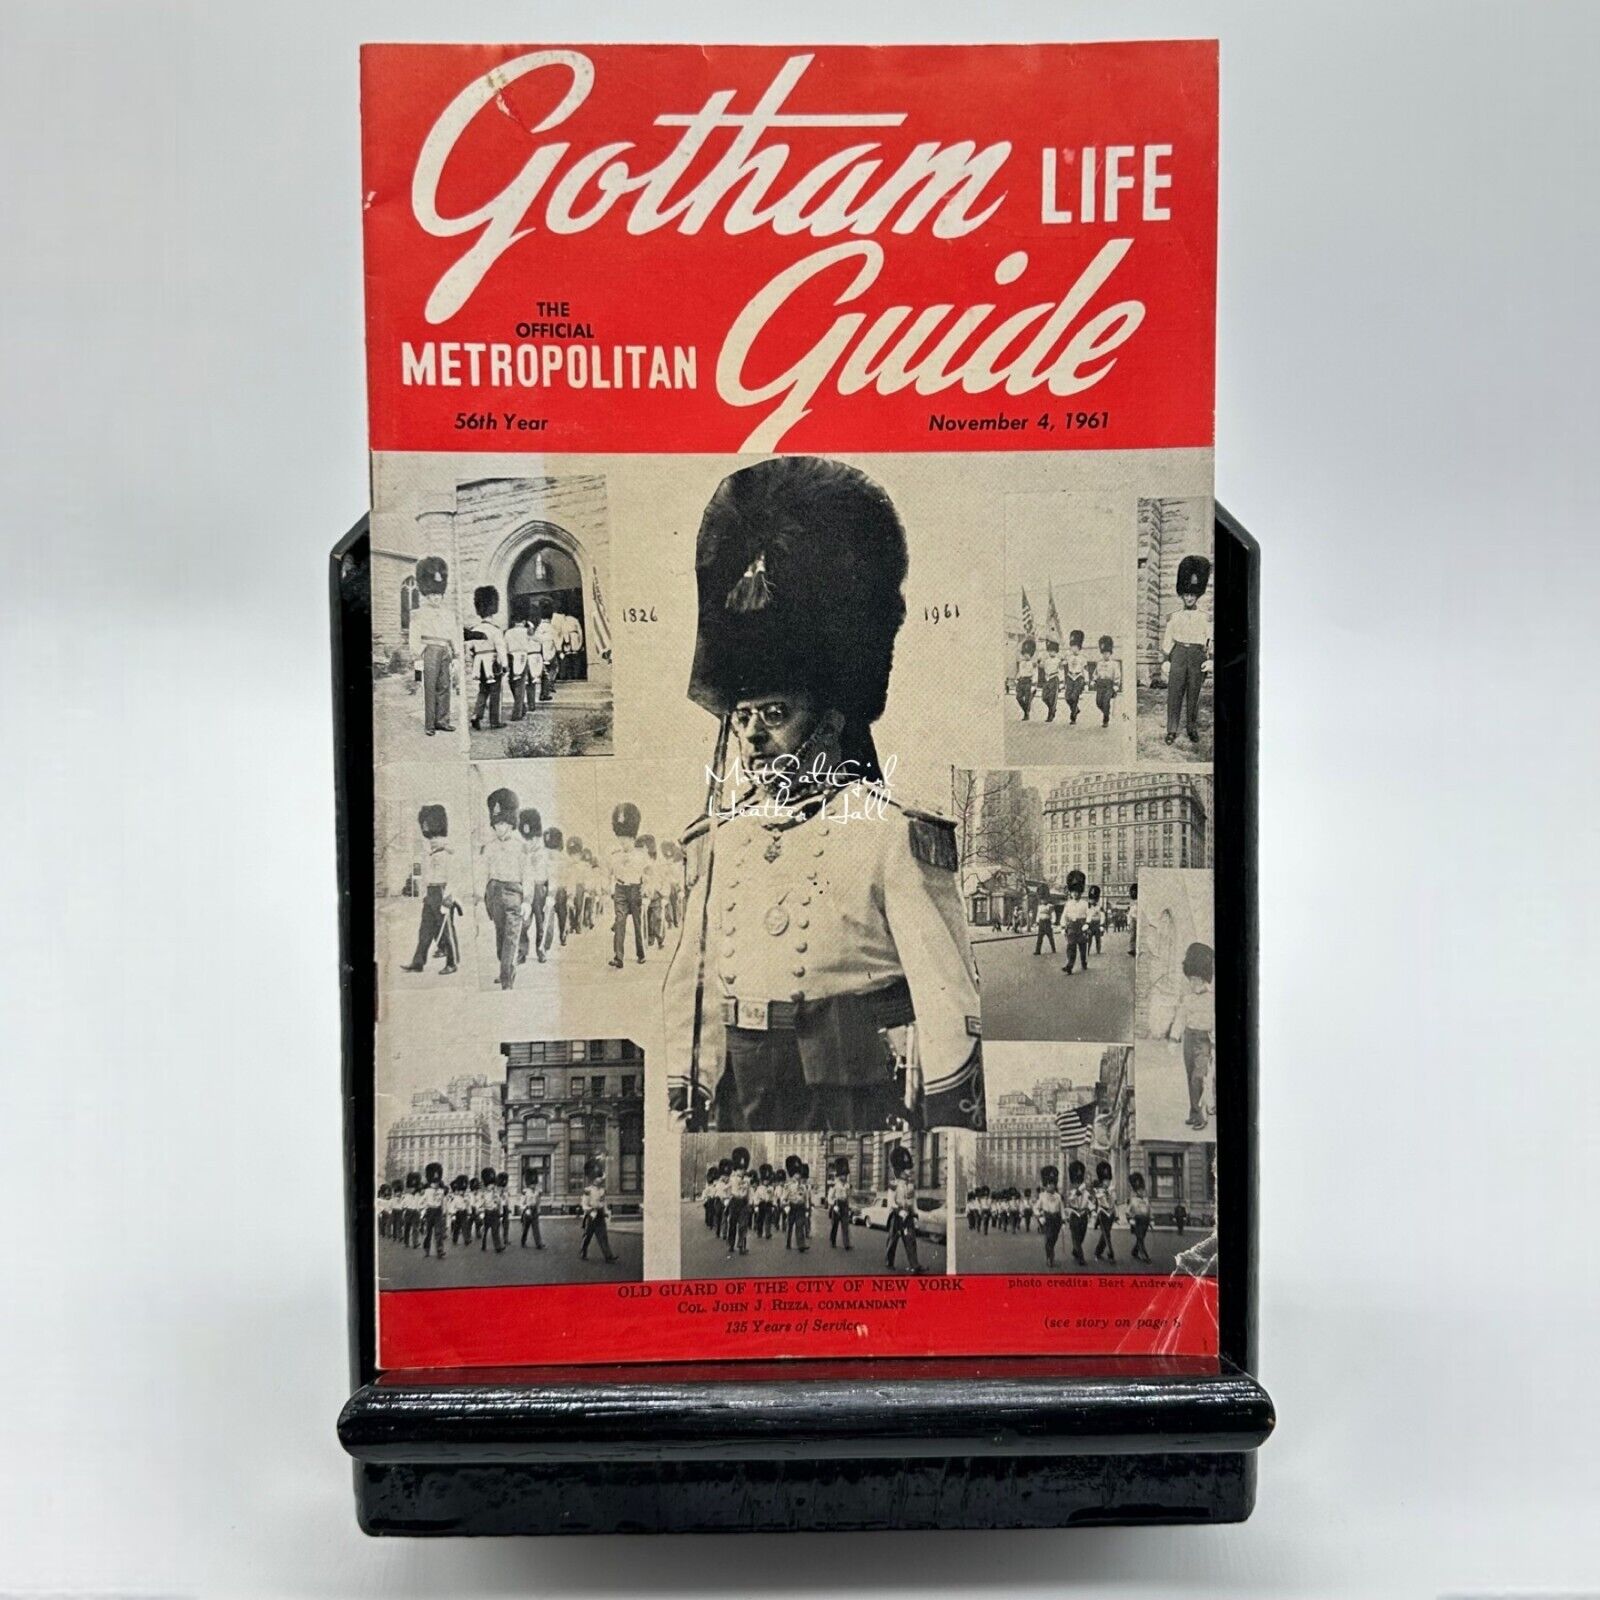 Gotham Life Guide Official Metropolitan 56th Year November 4, 1961